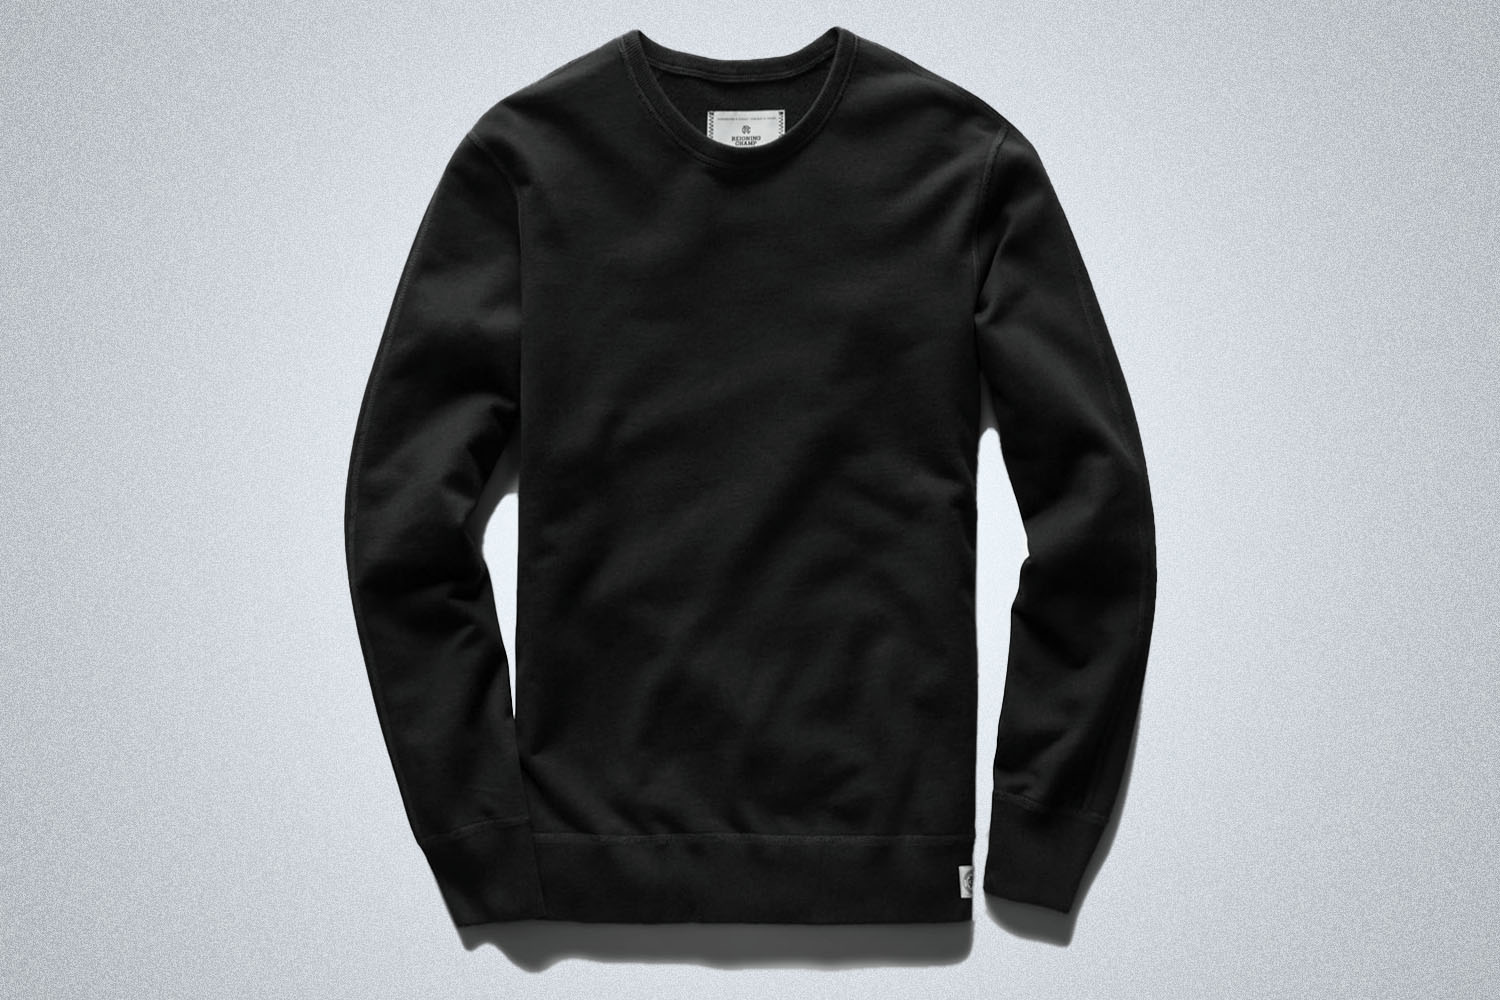 a black crewneck sweatshirt 